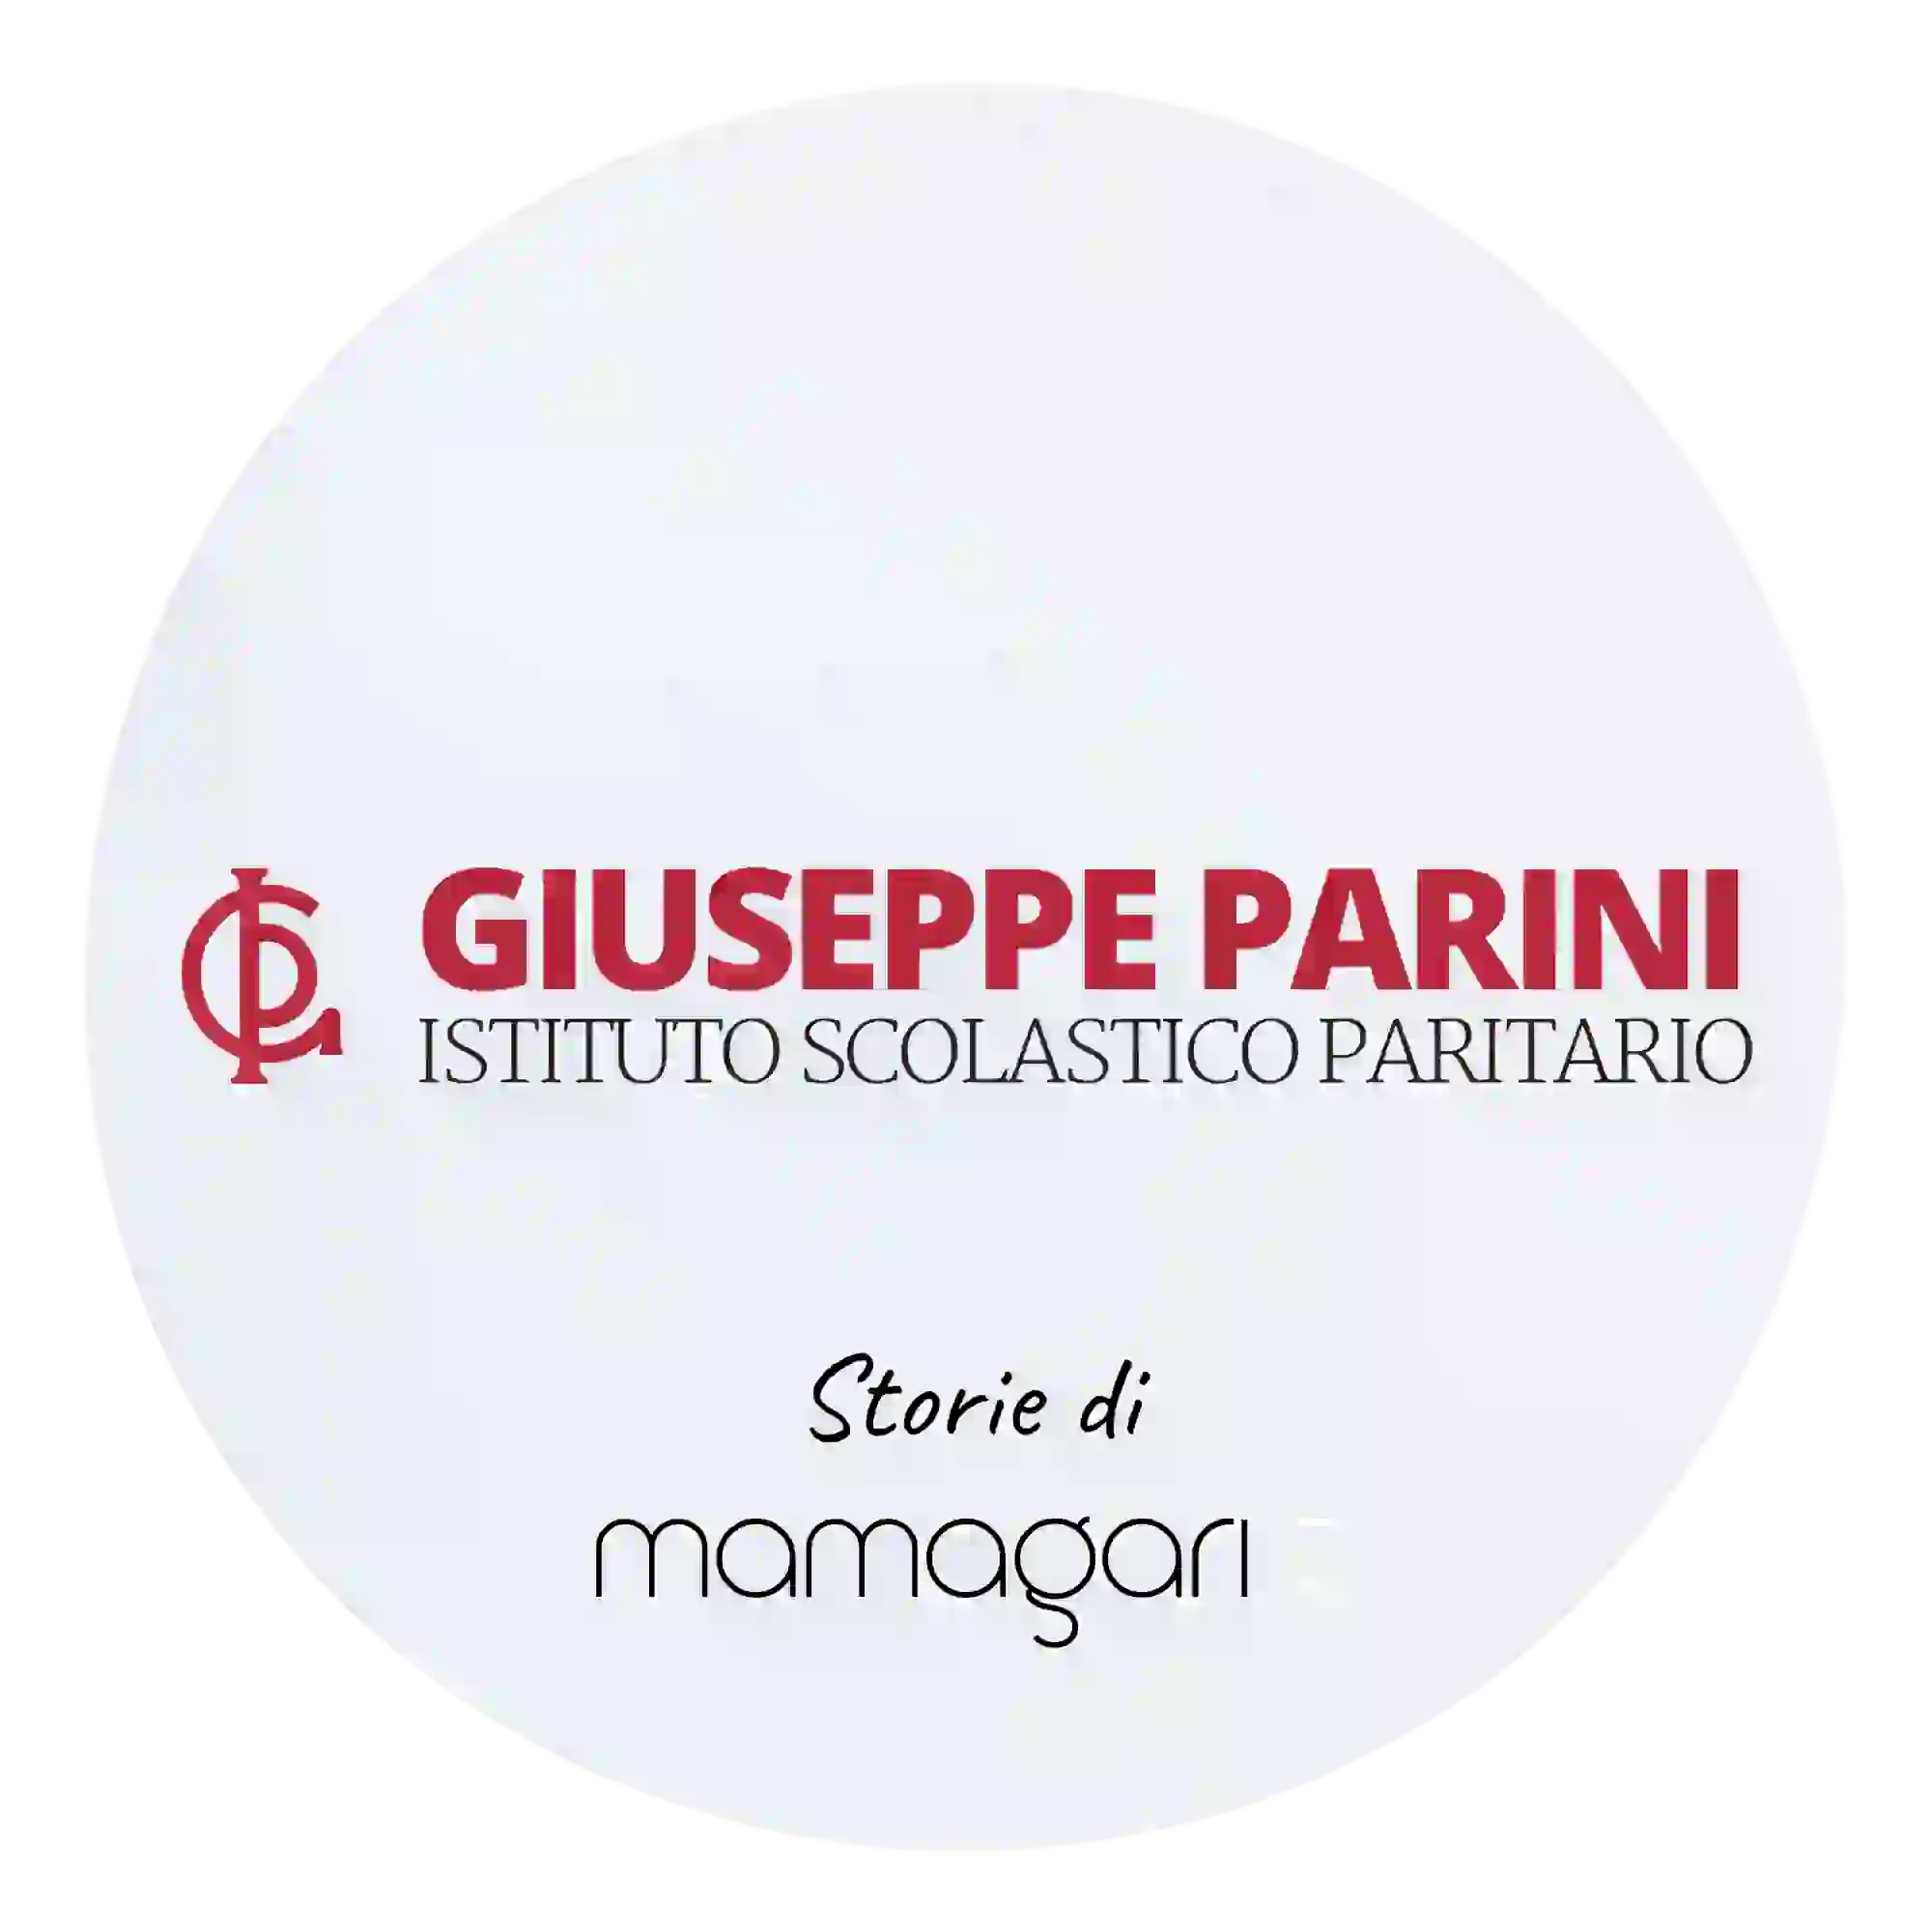 Giuseppe Parini Agenzia di web marketing italia seo google ads social e website